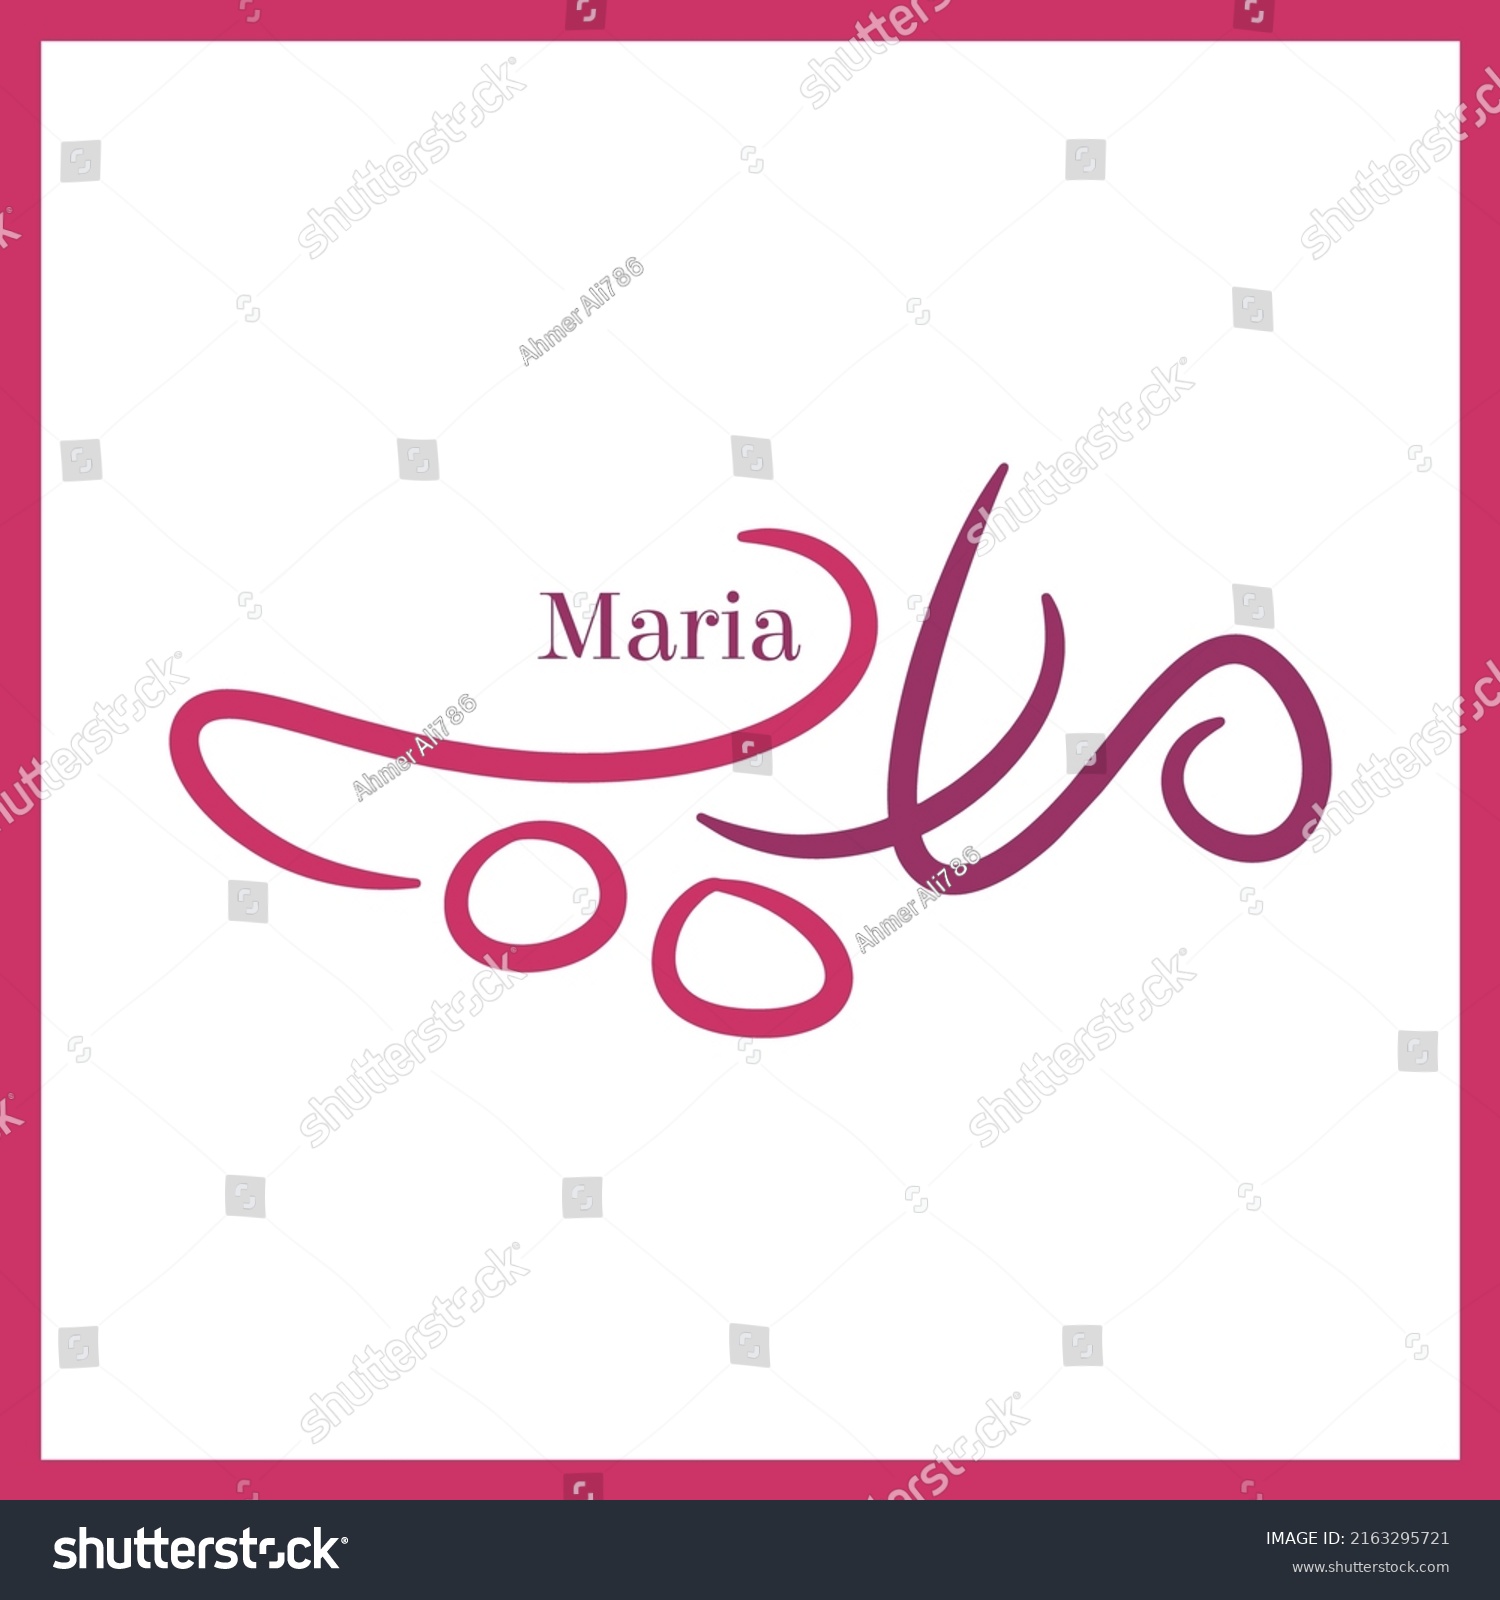 maria name images